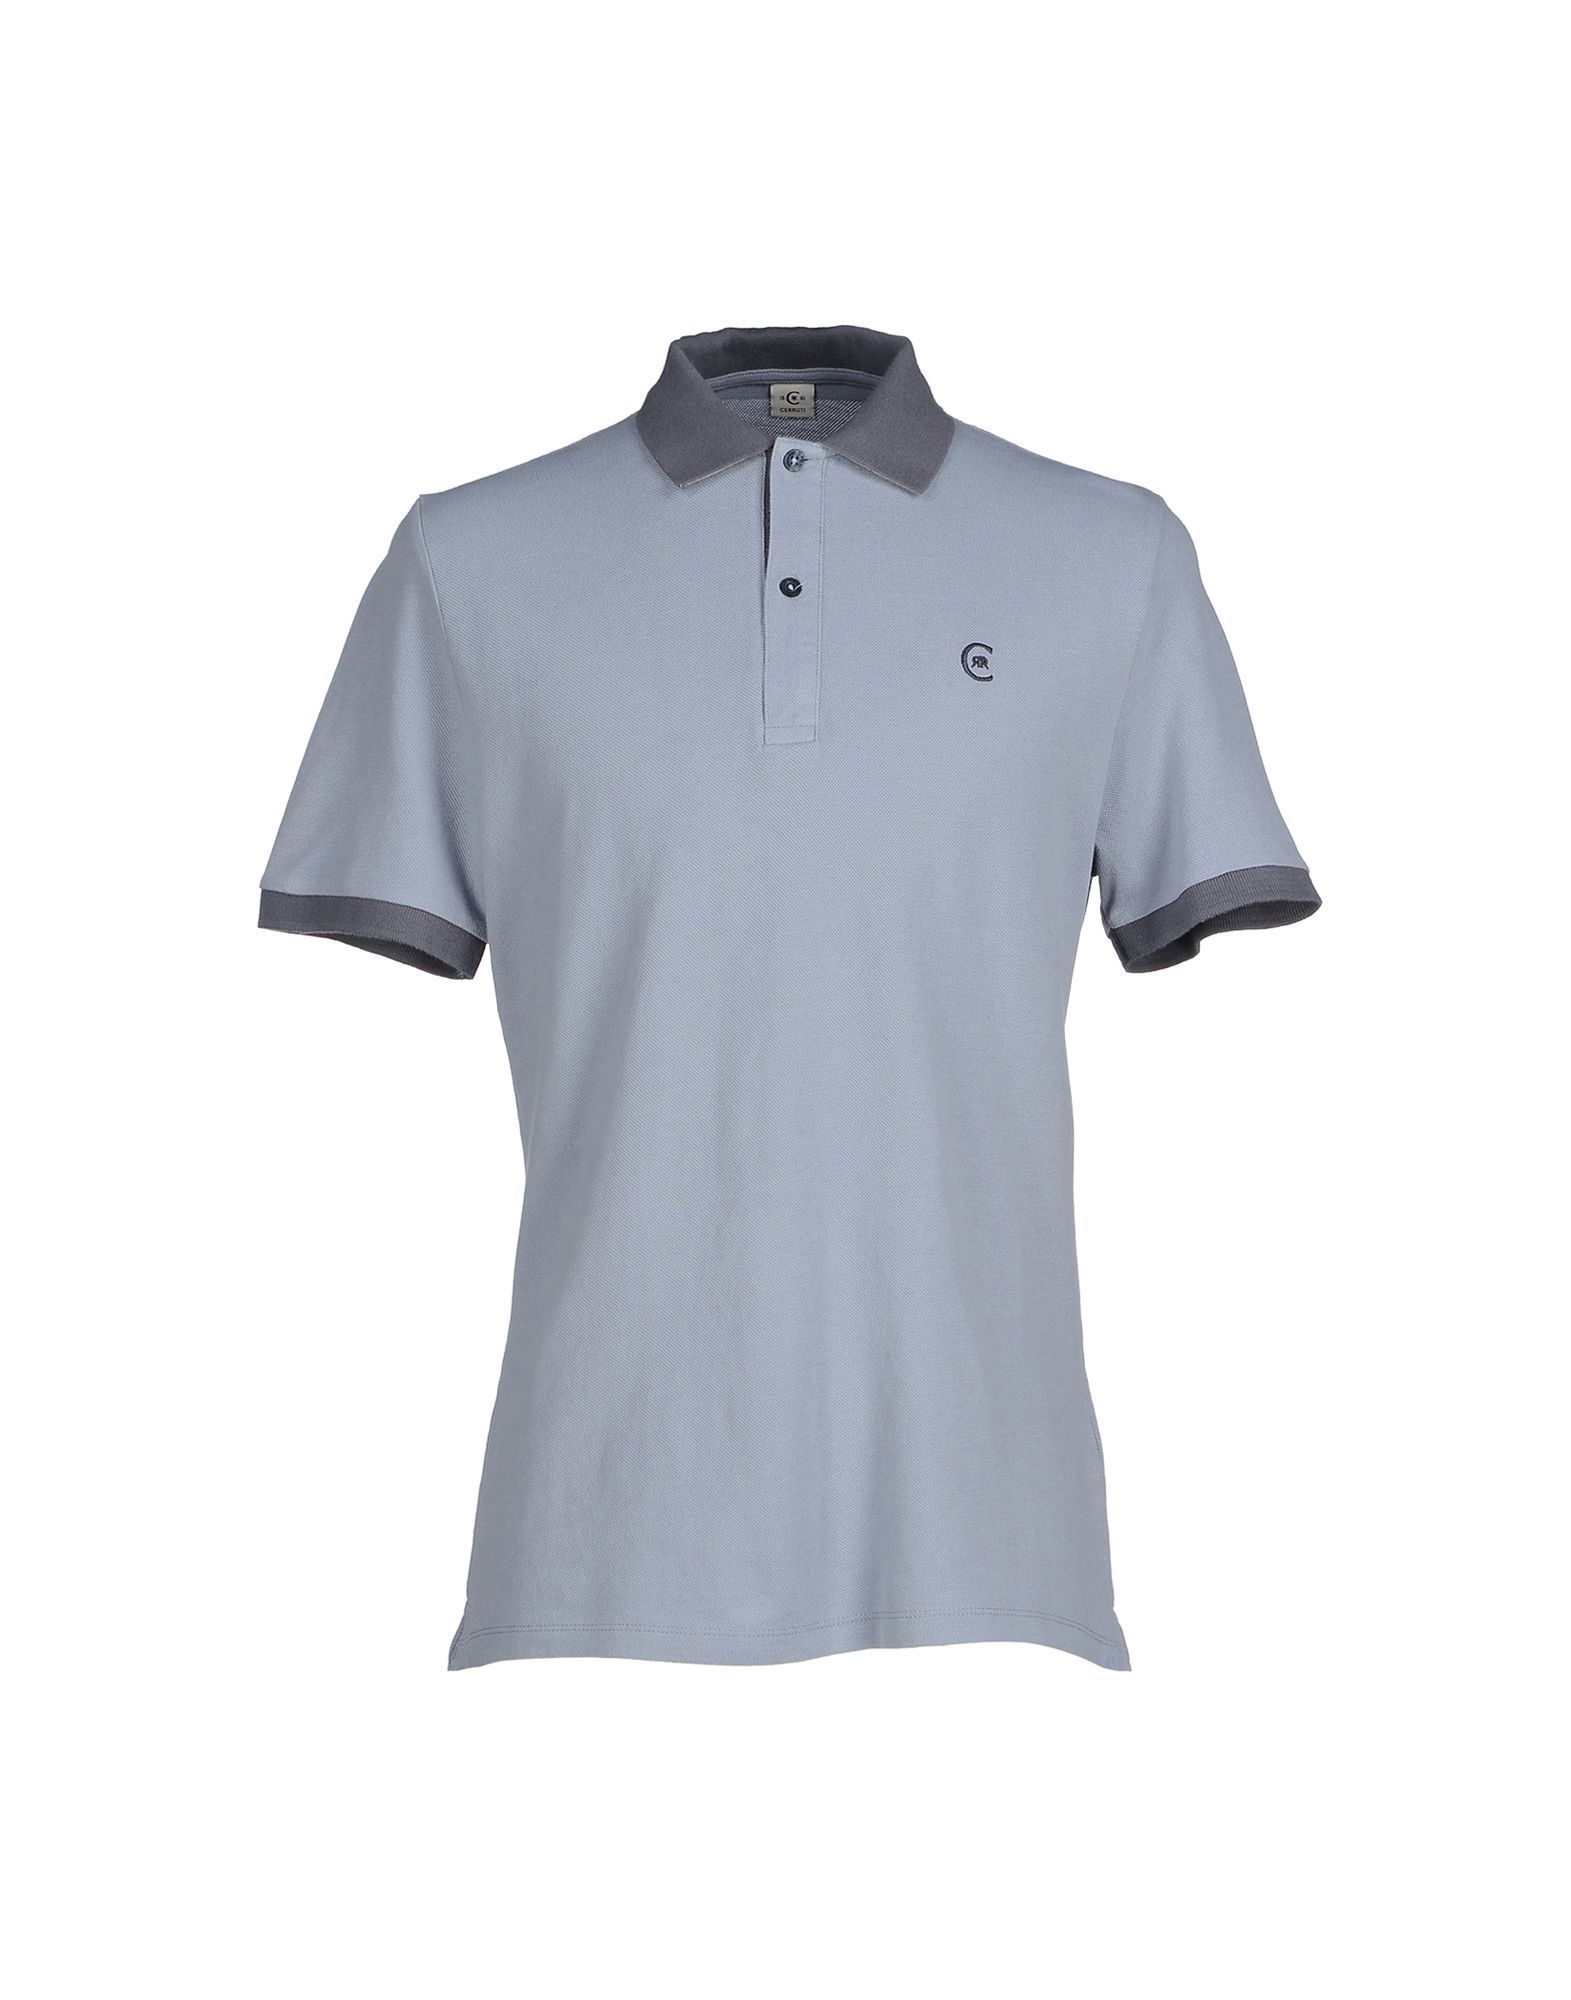 Cerruti 1881 Grey Cotton Short Sleeve Polo Shirt